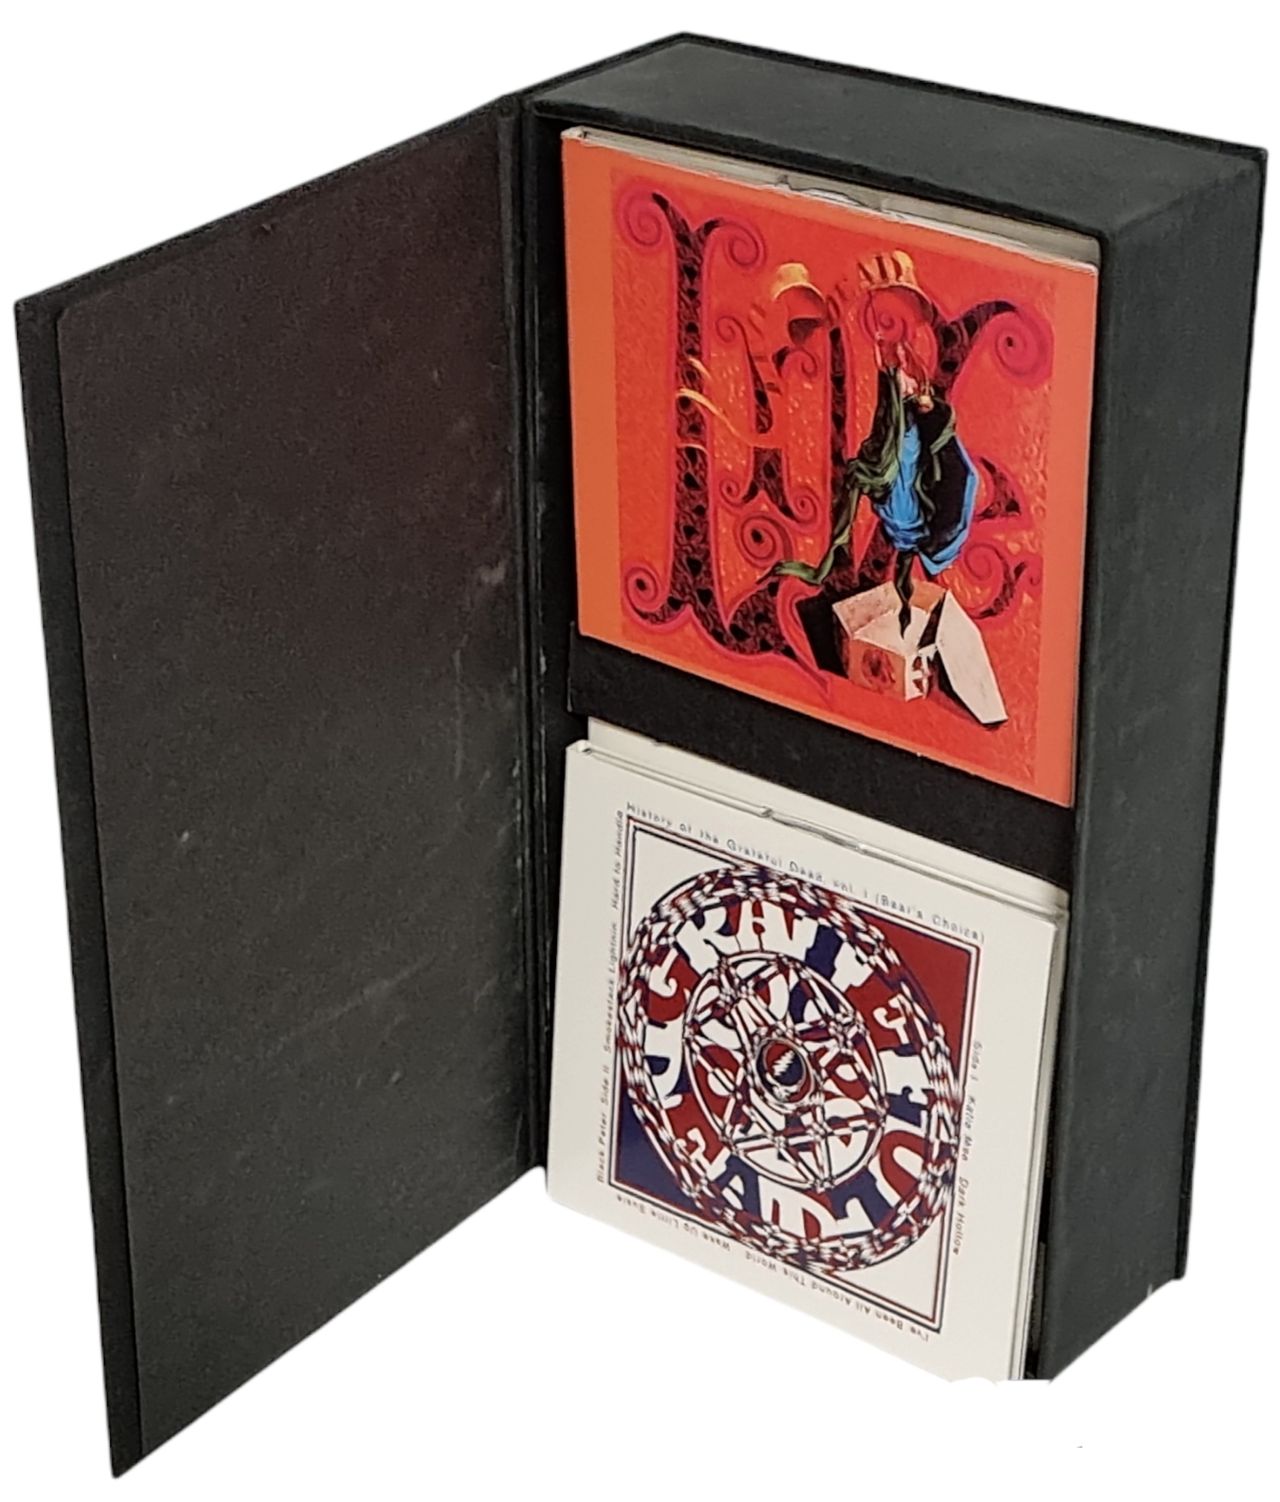 Grateful Dead The Golden Road 1965-1973 US Cd album box set